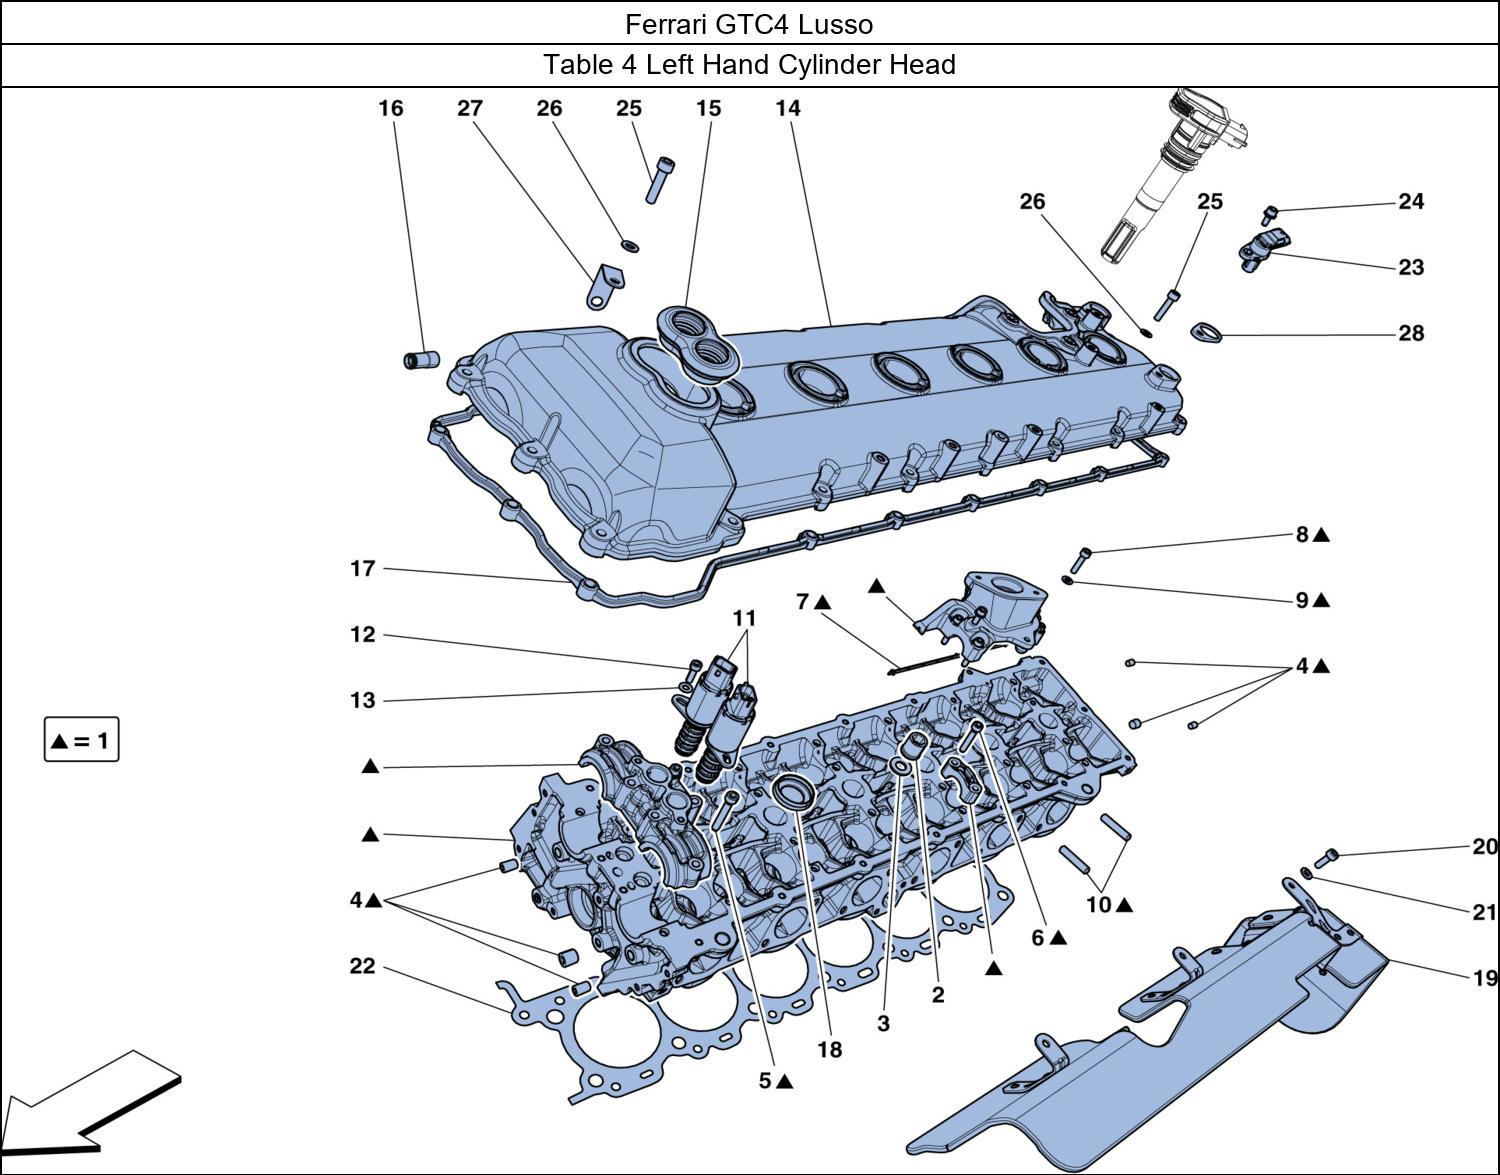 Ferrari Parts Ferrari GTC4 Lusso Table 4 Left Hand Cylinder Head